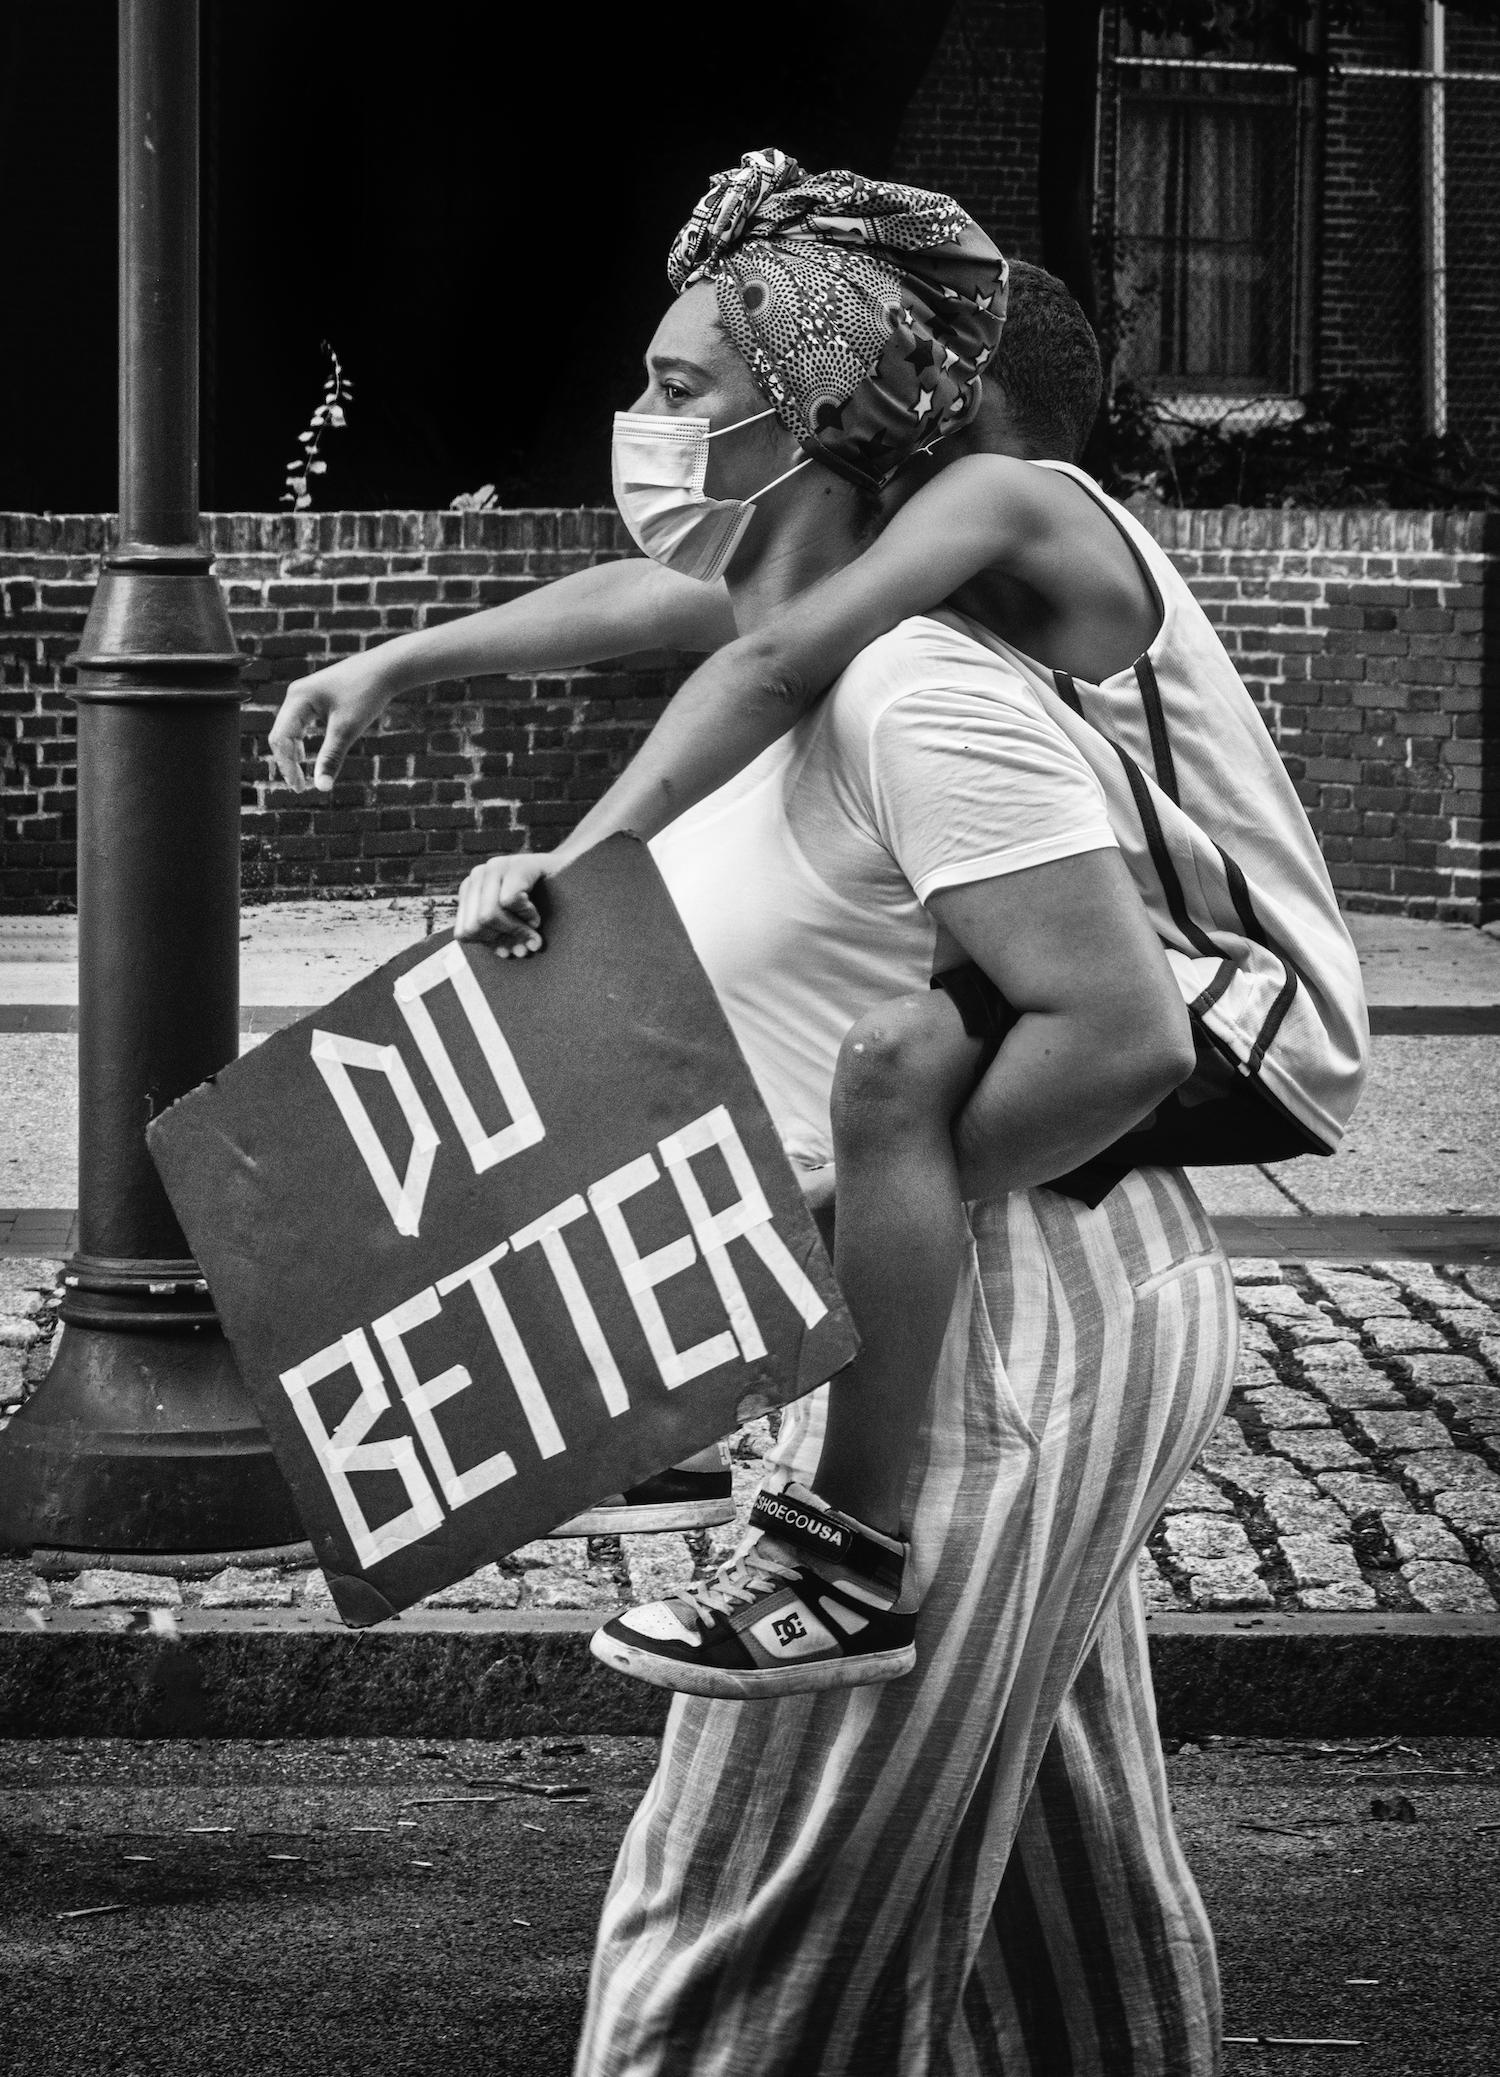 Ada Trillo Figurative Photograph - Do Better: Black Lives Matter city documentary photograph w/ mother & child